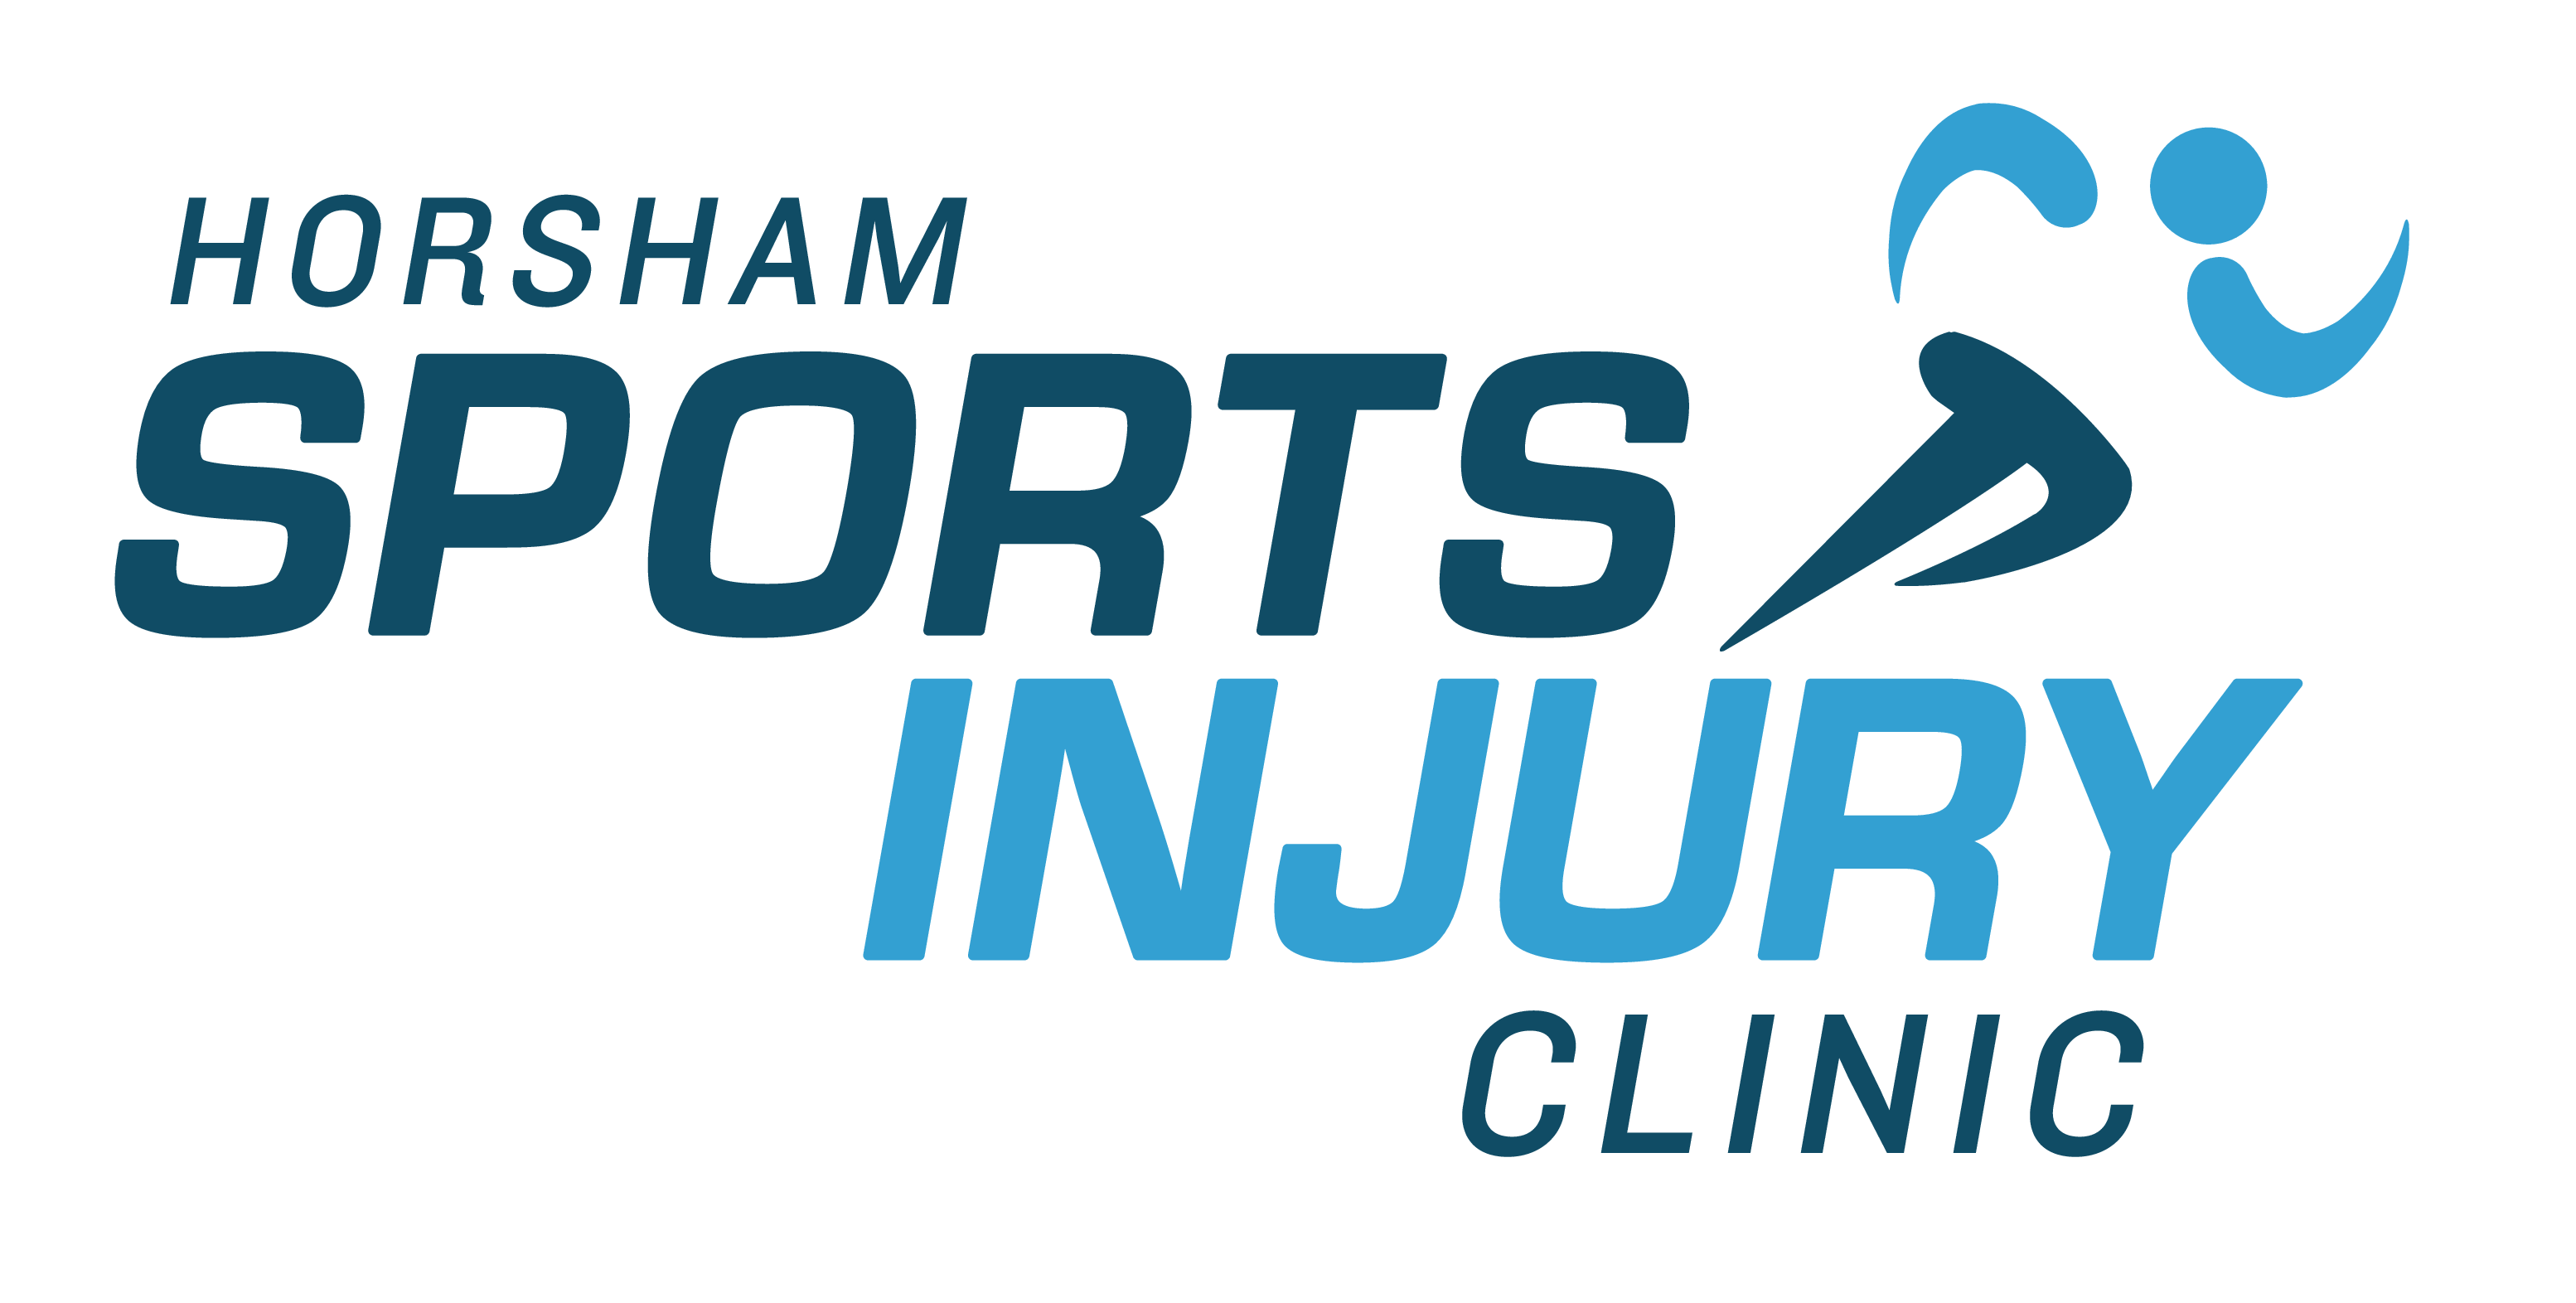 Horsham Sports Injury Clinic